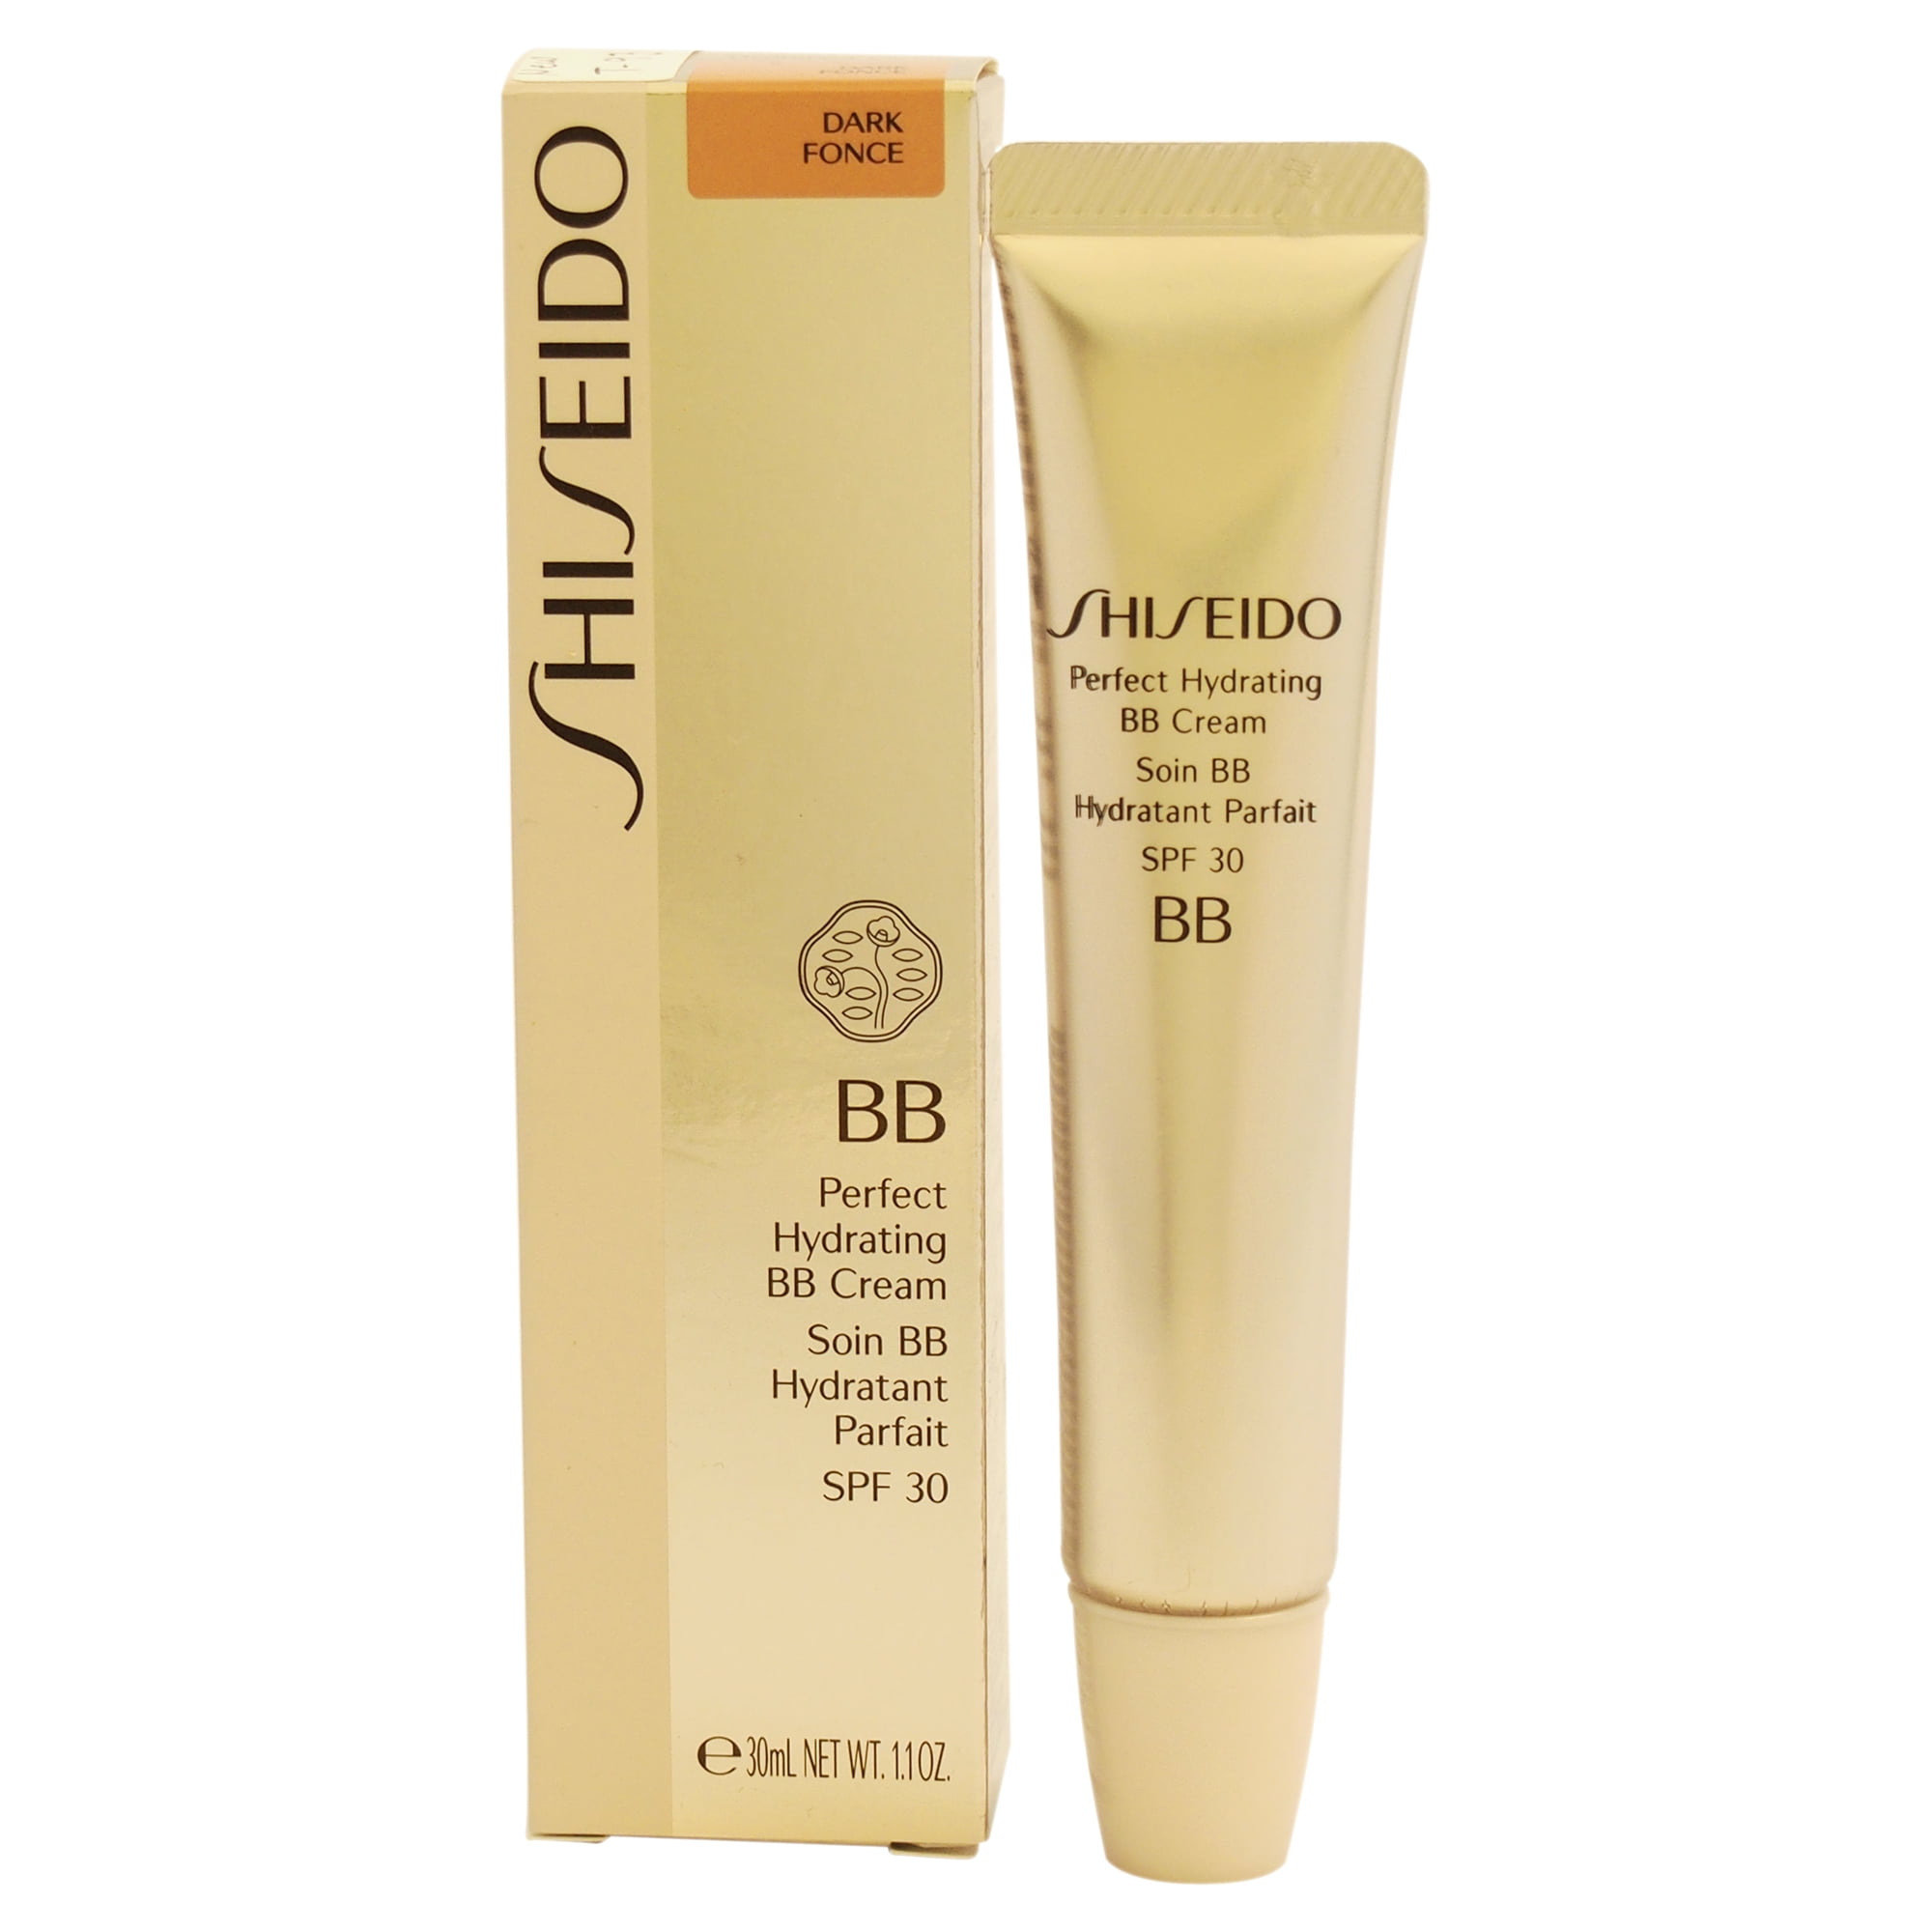 Shiseido 30. Shiseido BB-крем spf30. Крем SPF 30 Shiseido. Шисейдо крем BB SPF 30. Shiseido perfect Hydrating BB Cream.